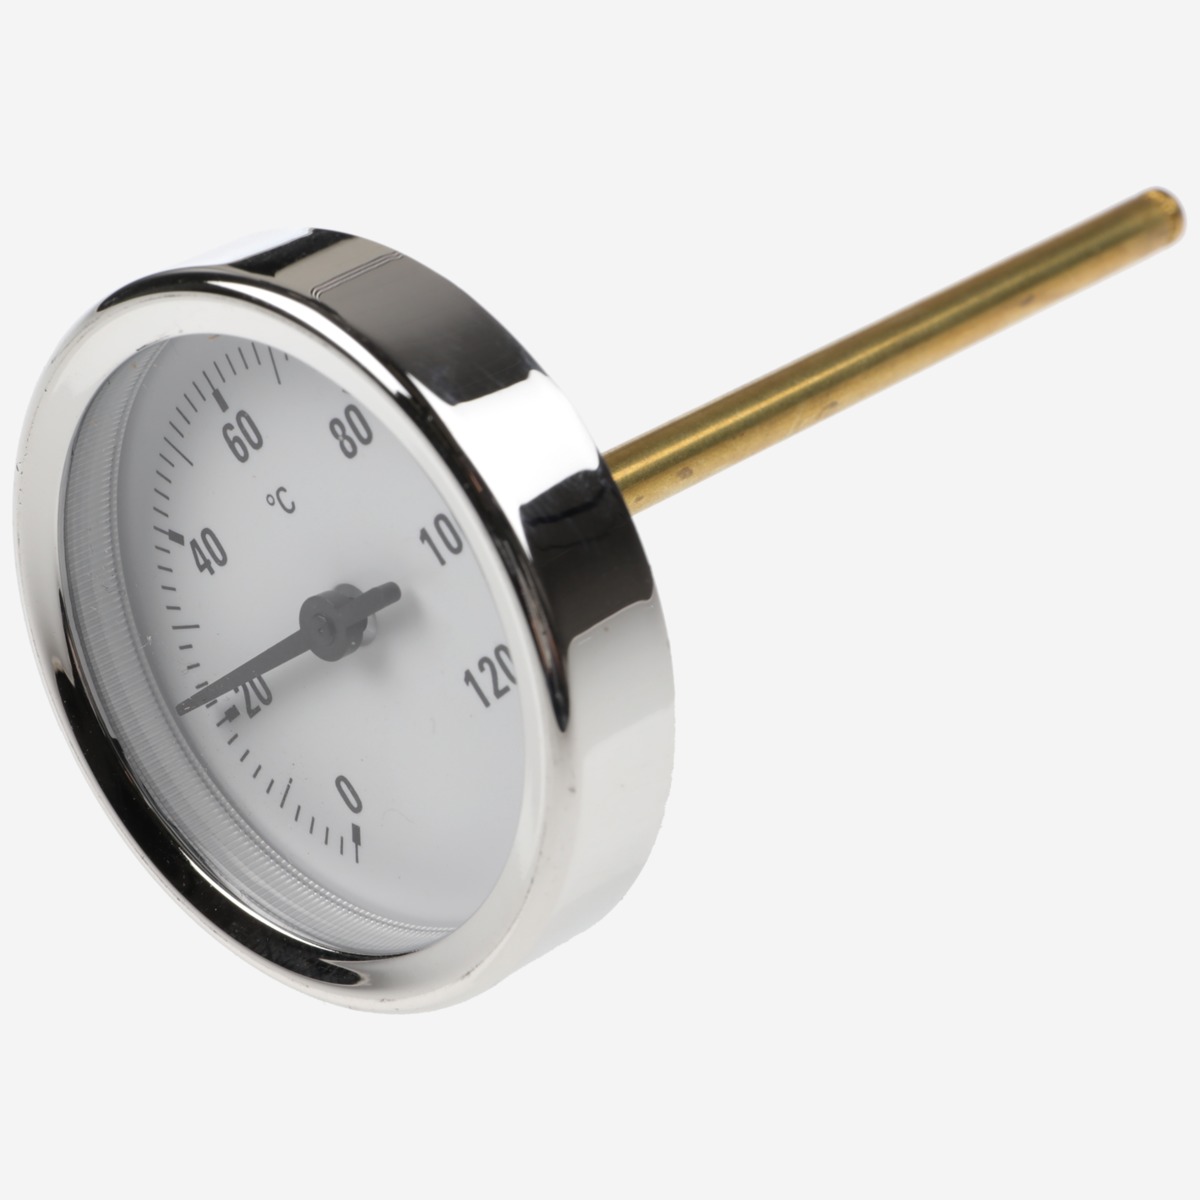 Weishaupt Thermometer 0-120Cel. Dm.51mm Fühler Dm.5 x 83mm 40900004507